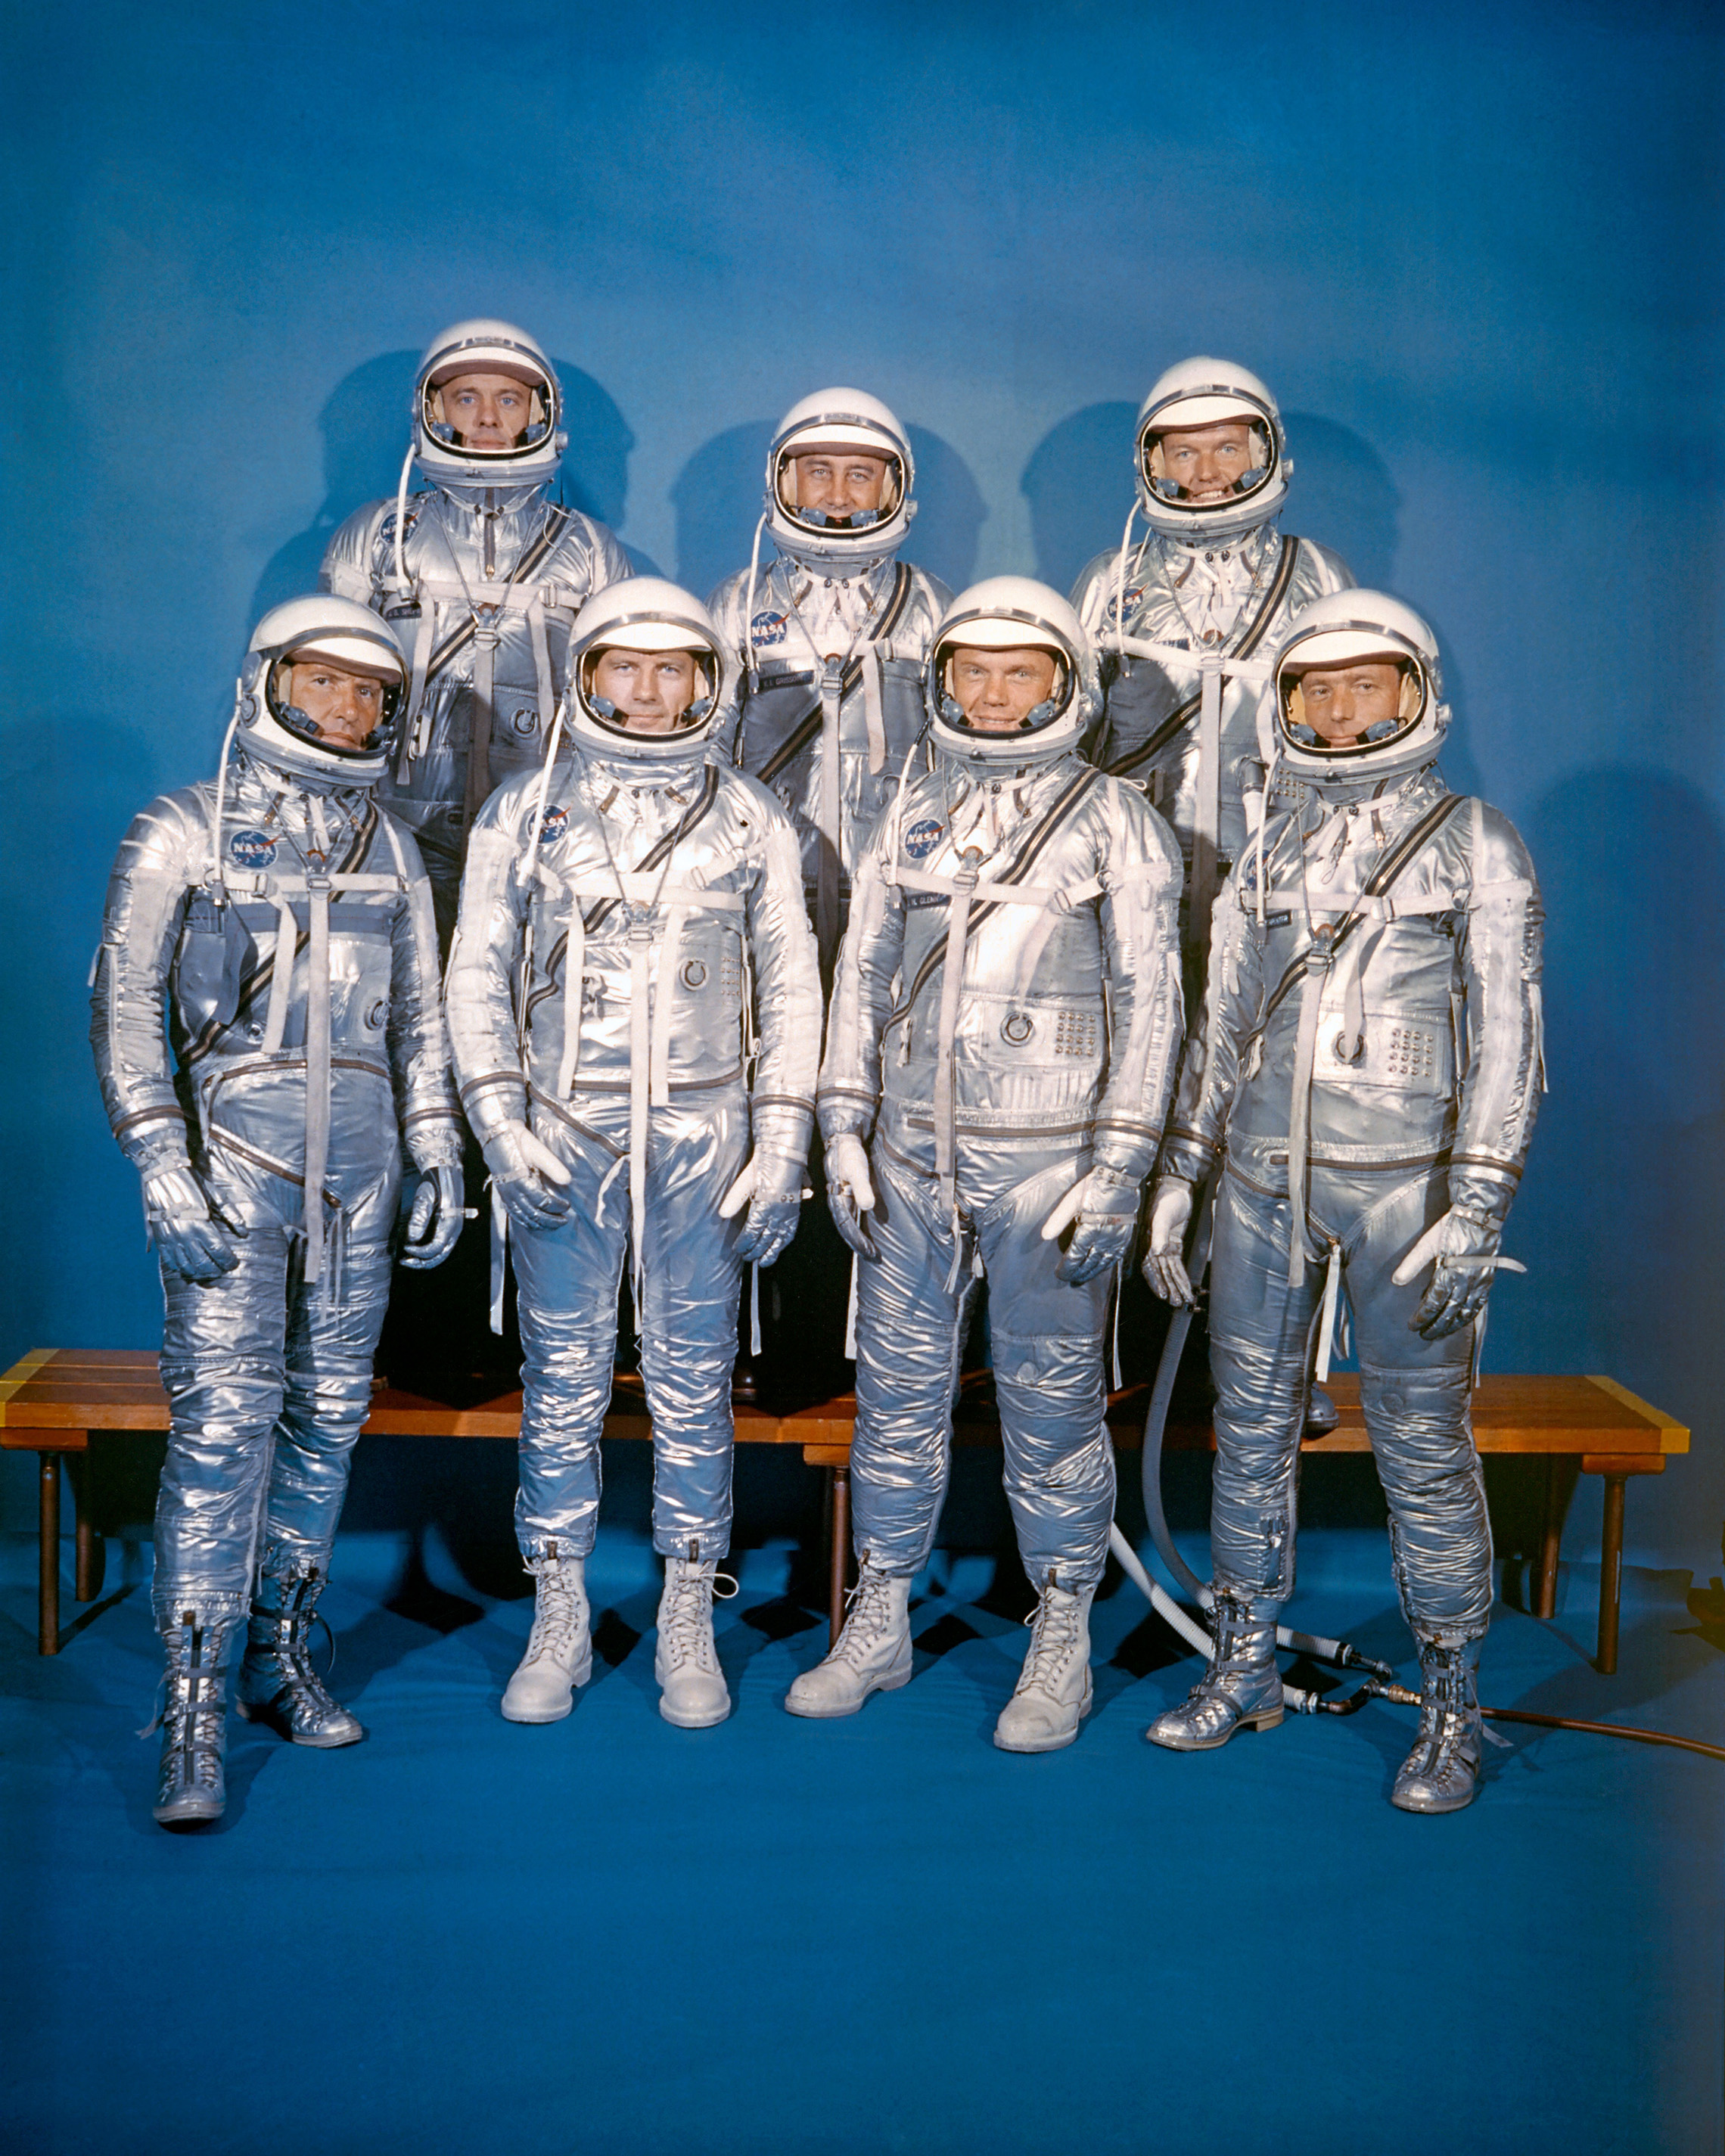 la 9 aprilie 1959, NASA a introdus prima sa clasă de astronauți, Mercury 7. Rândul din față, de la stânga la dreapta: Walter M. Schirra, Jr., Donald K. "Deke" Slayton, John H. Glenn, Jr. și M. Scott Carpenter; rândul din spate, Alan B. Shepard, Jr., Virgil I." Gus " Grissom și L. Gordon Cooper, Jr. (NASA)"Deke" Slayton, John H. Glenn, Jr., and M. Scott Carpenter; back row, Alan B. Shepard, Jr., Virgil I. "Gus" Grissom, and L. Gordon Cooper, Jr. (NASA)